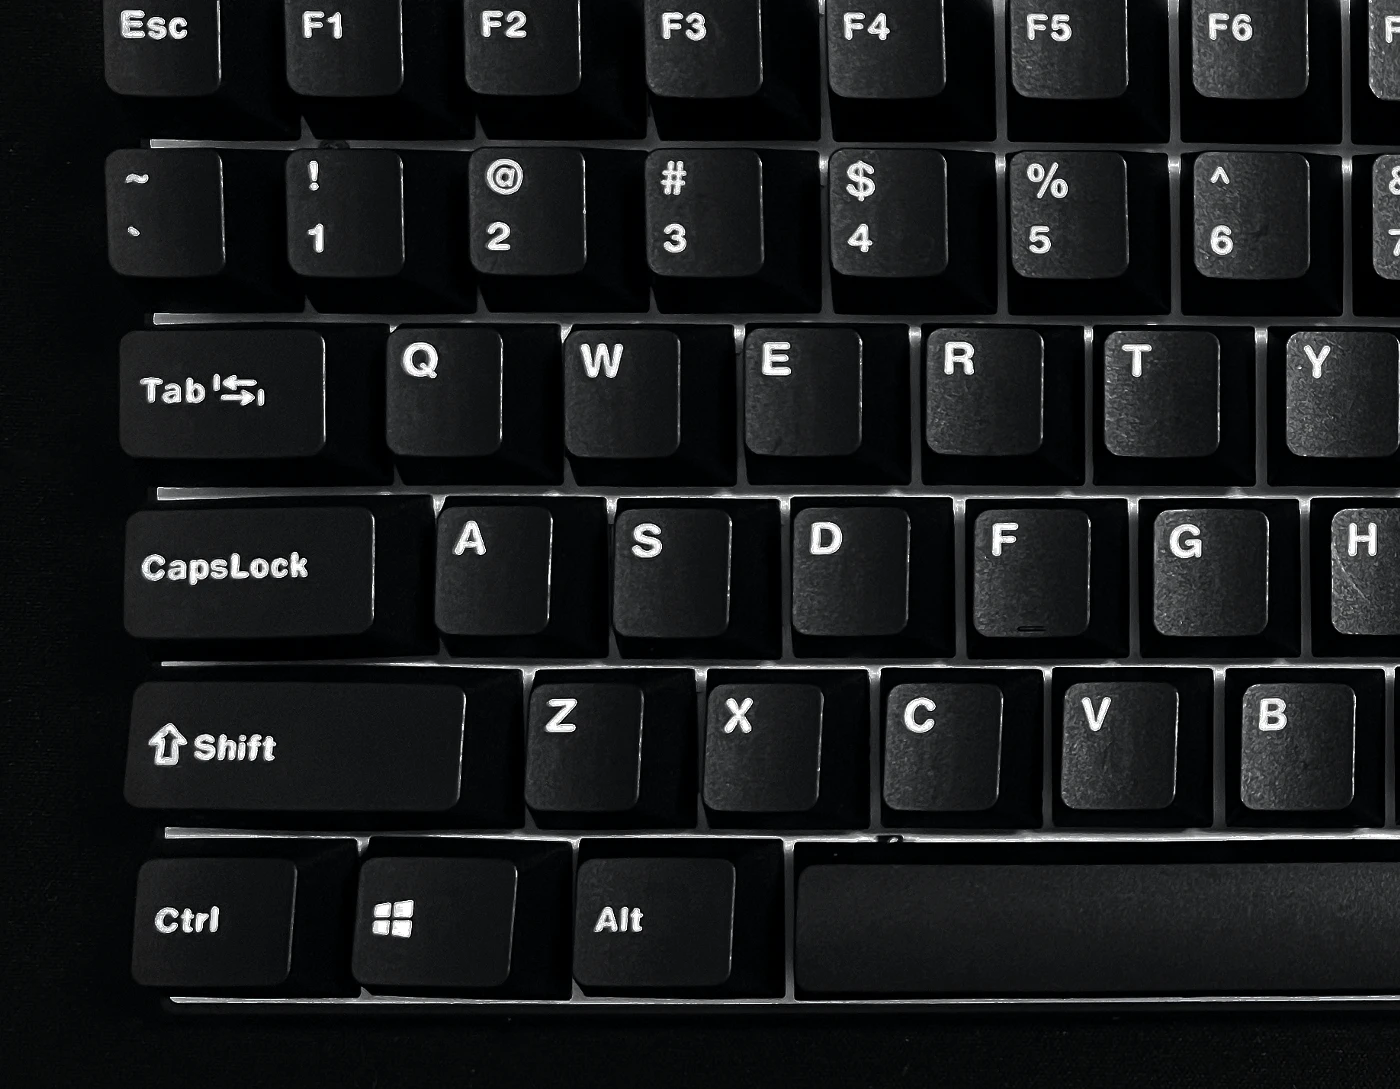 75% Keyboard